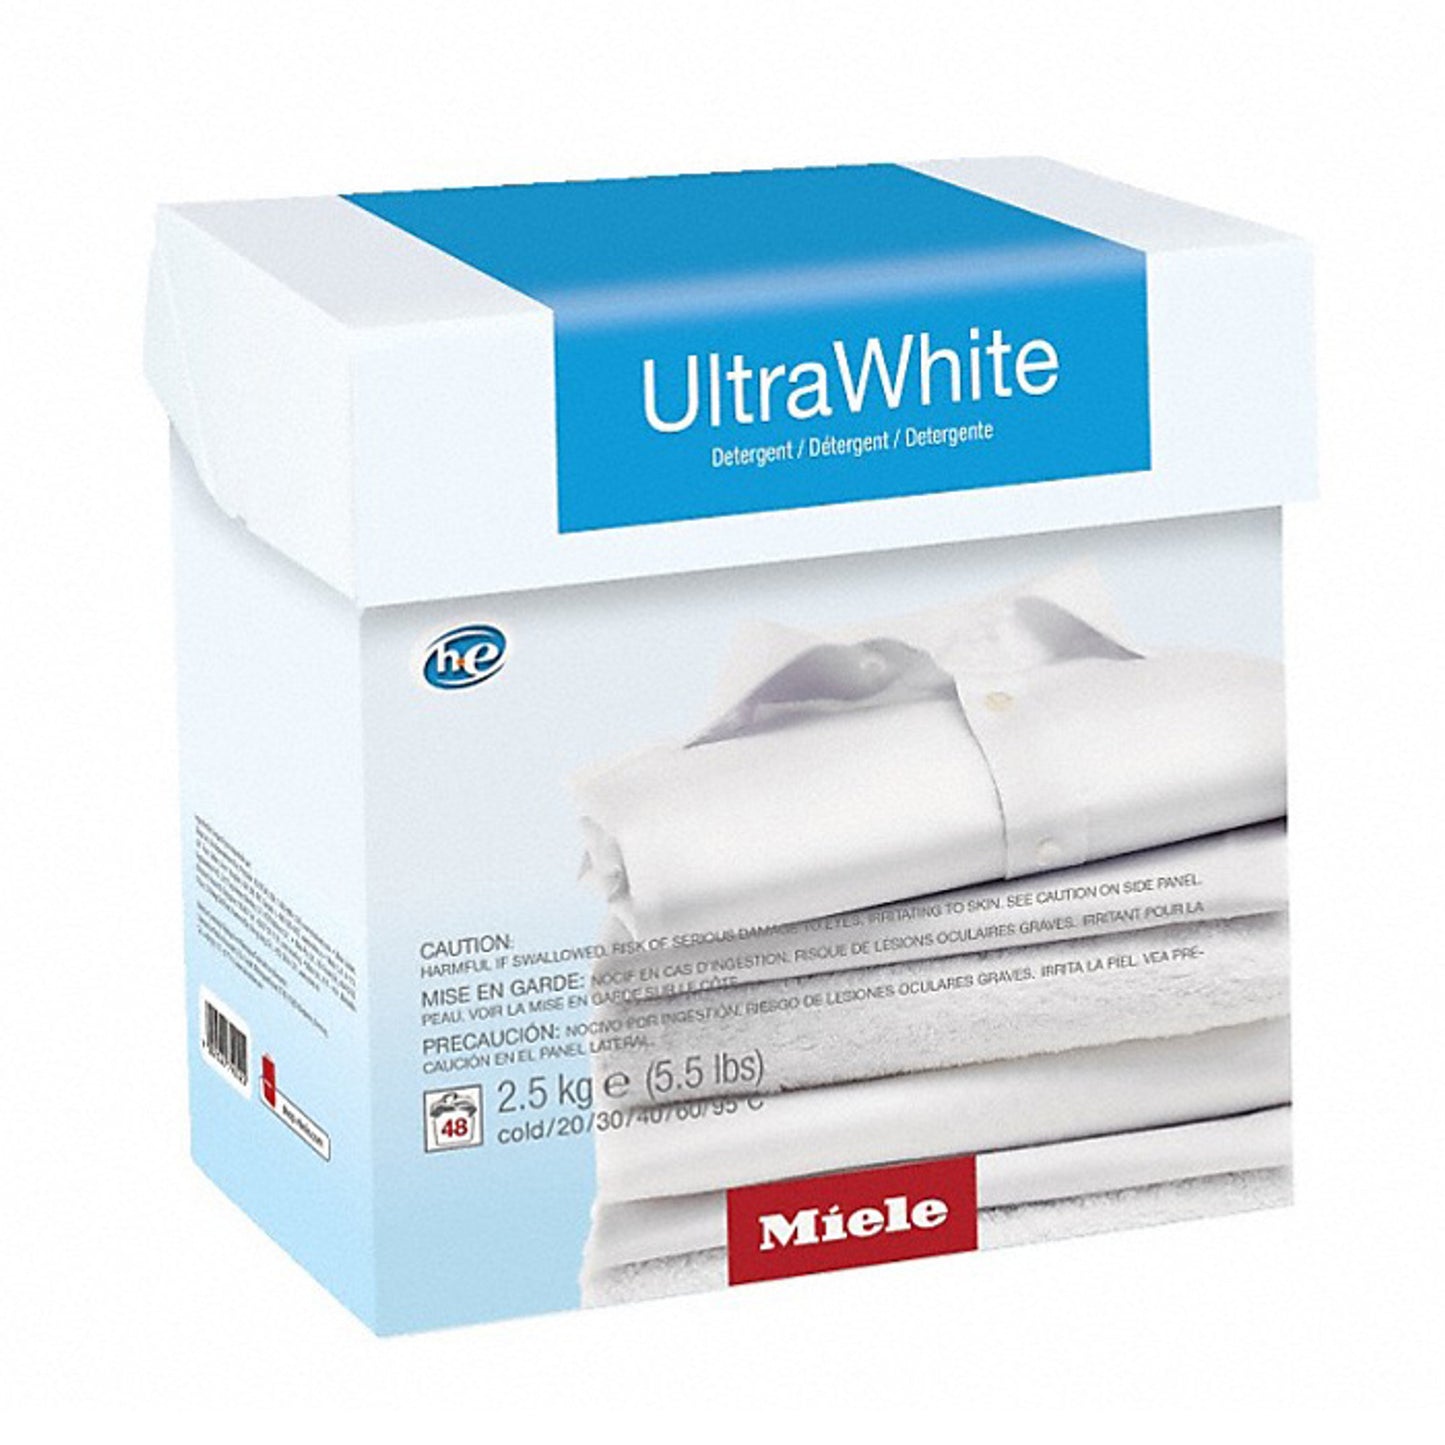 MIELE LAUNDRY DETERGENT ULTRA WHITE POWDER 2.5KG